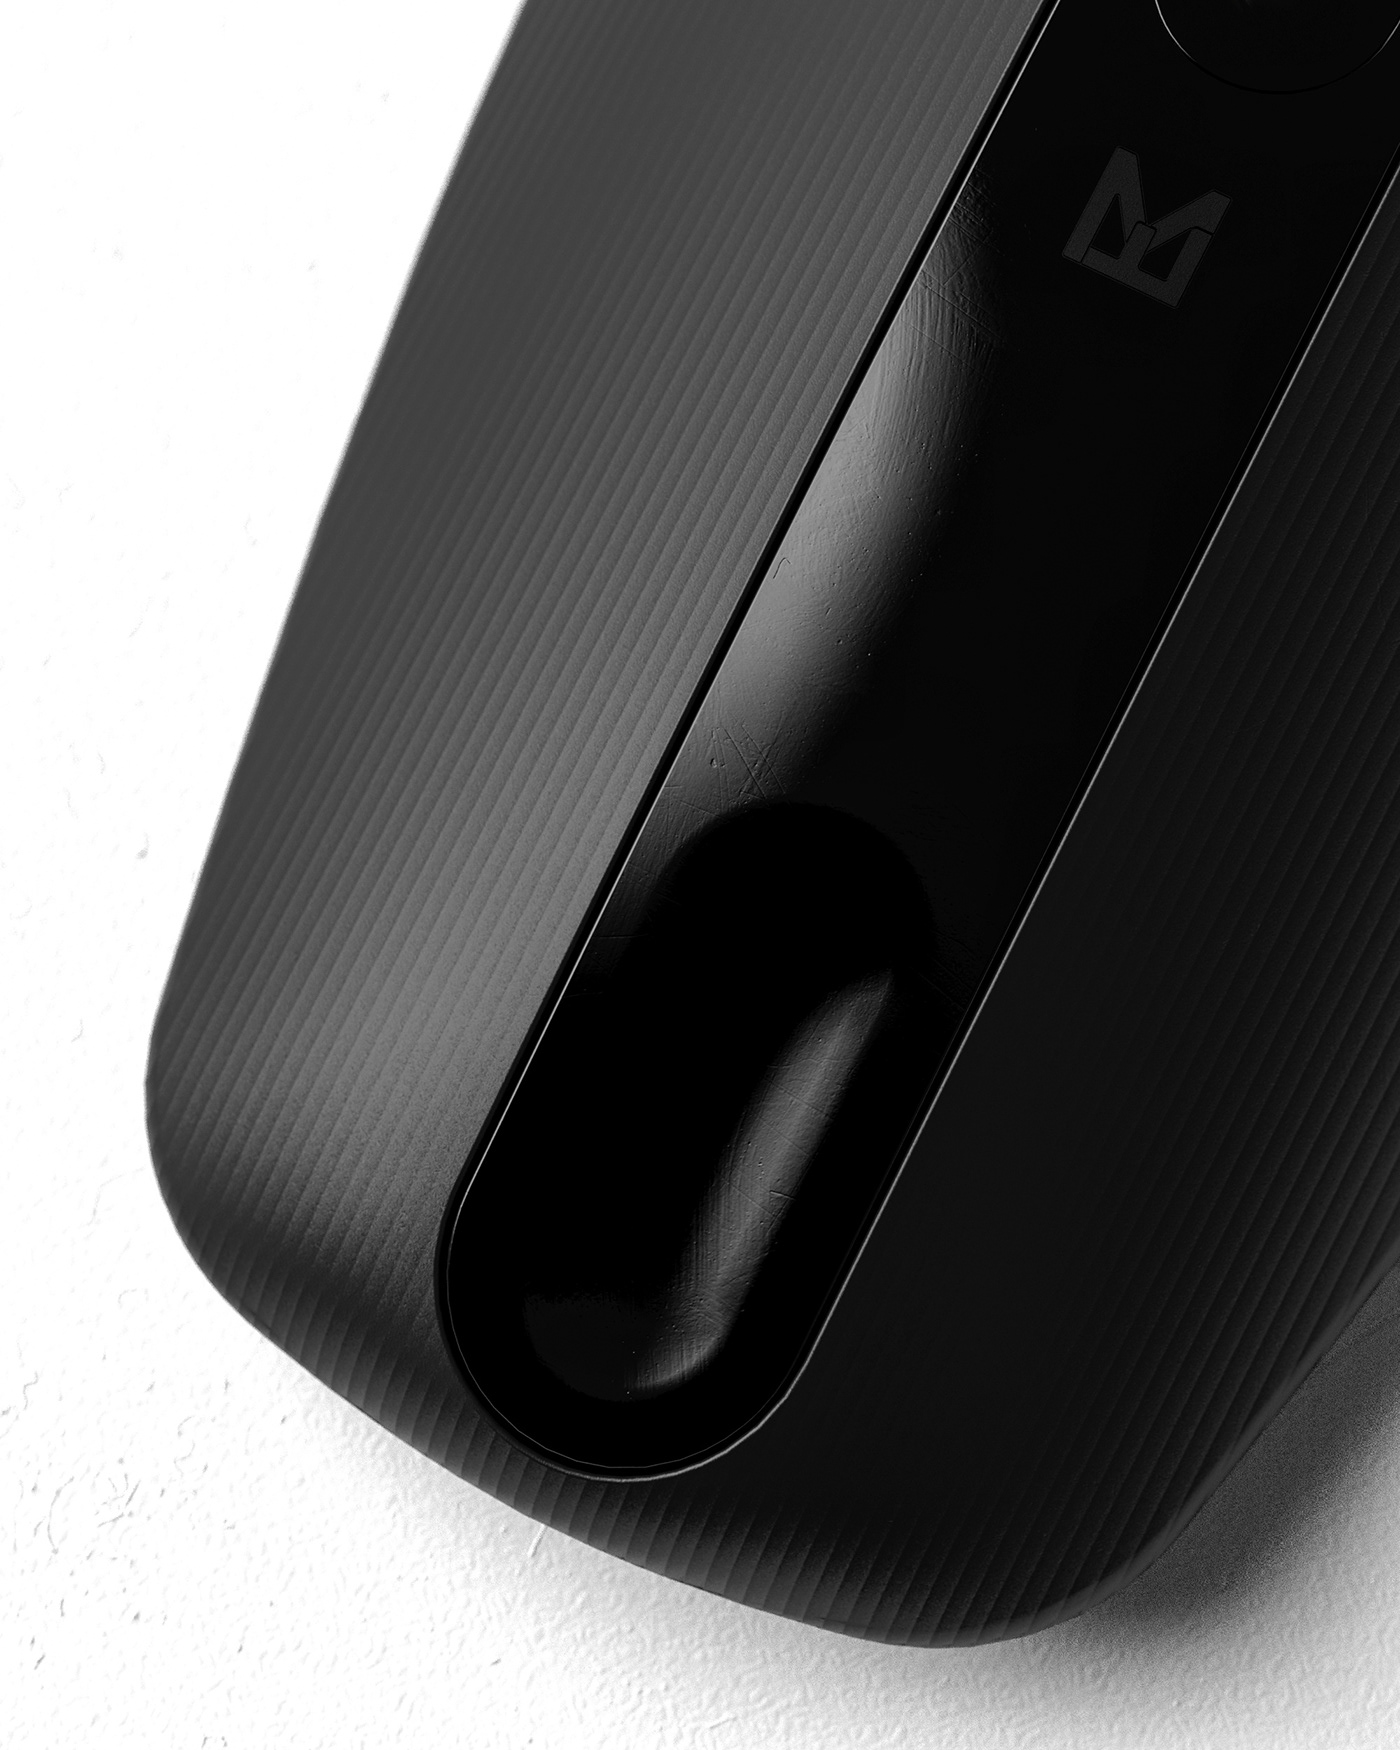 mouse tech black clean minimal Computer